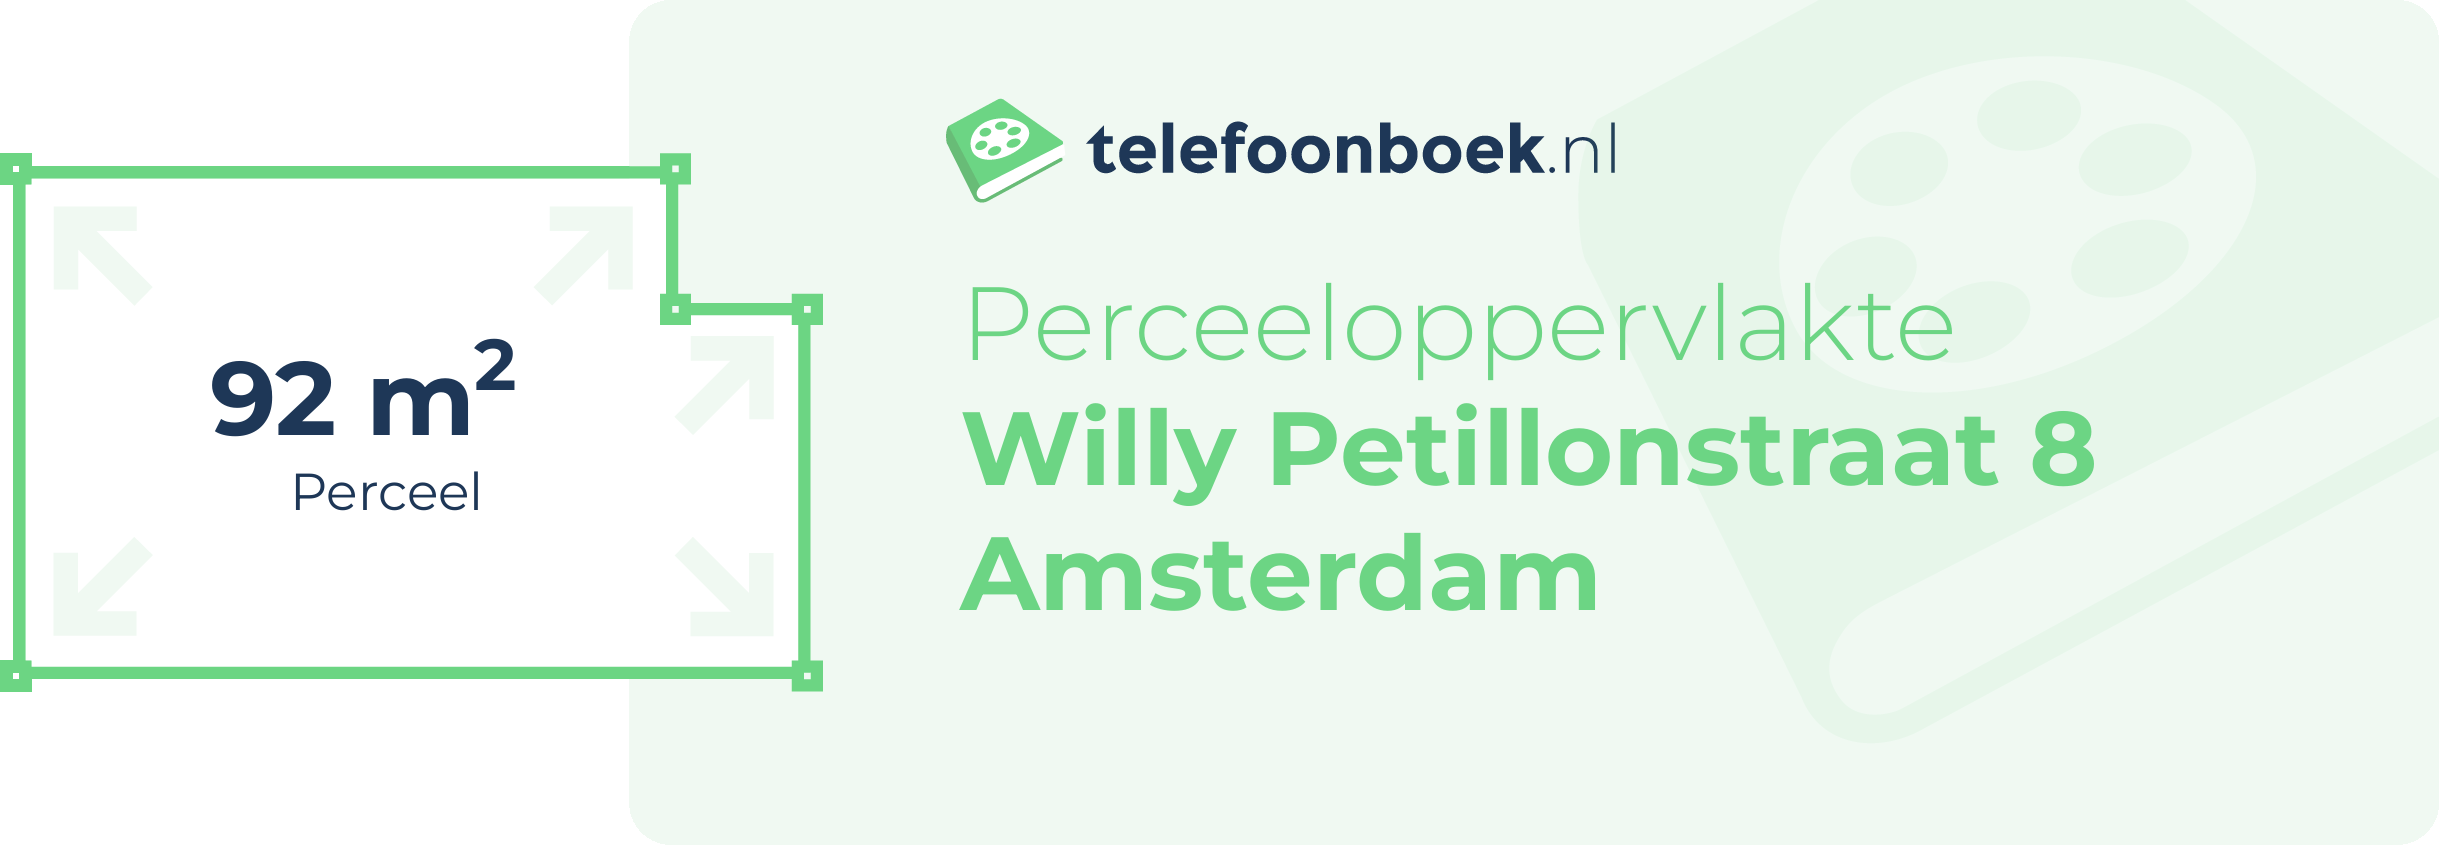 Perceeloppervlakte Willy Petillonstraat 8 Amsterdam